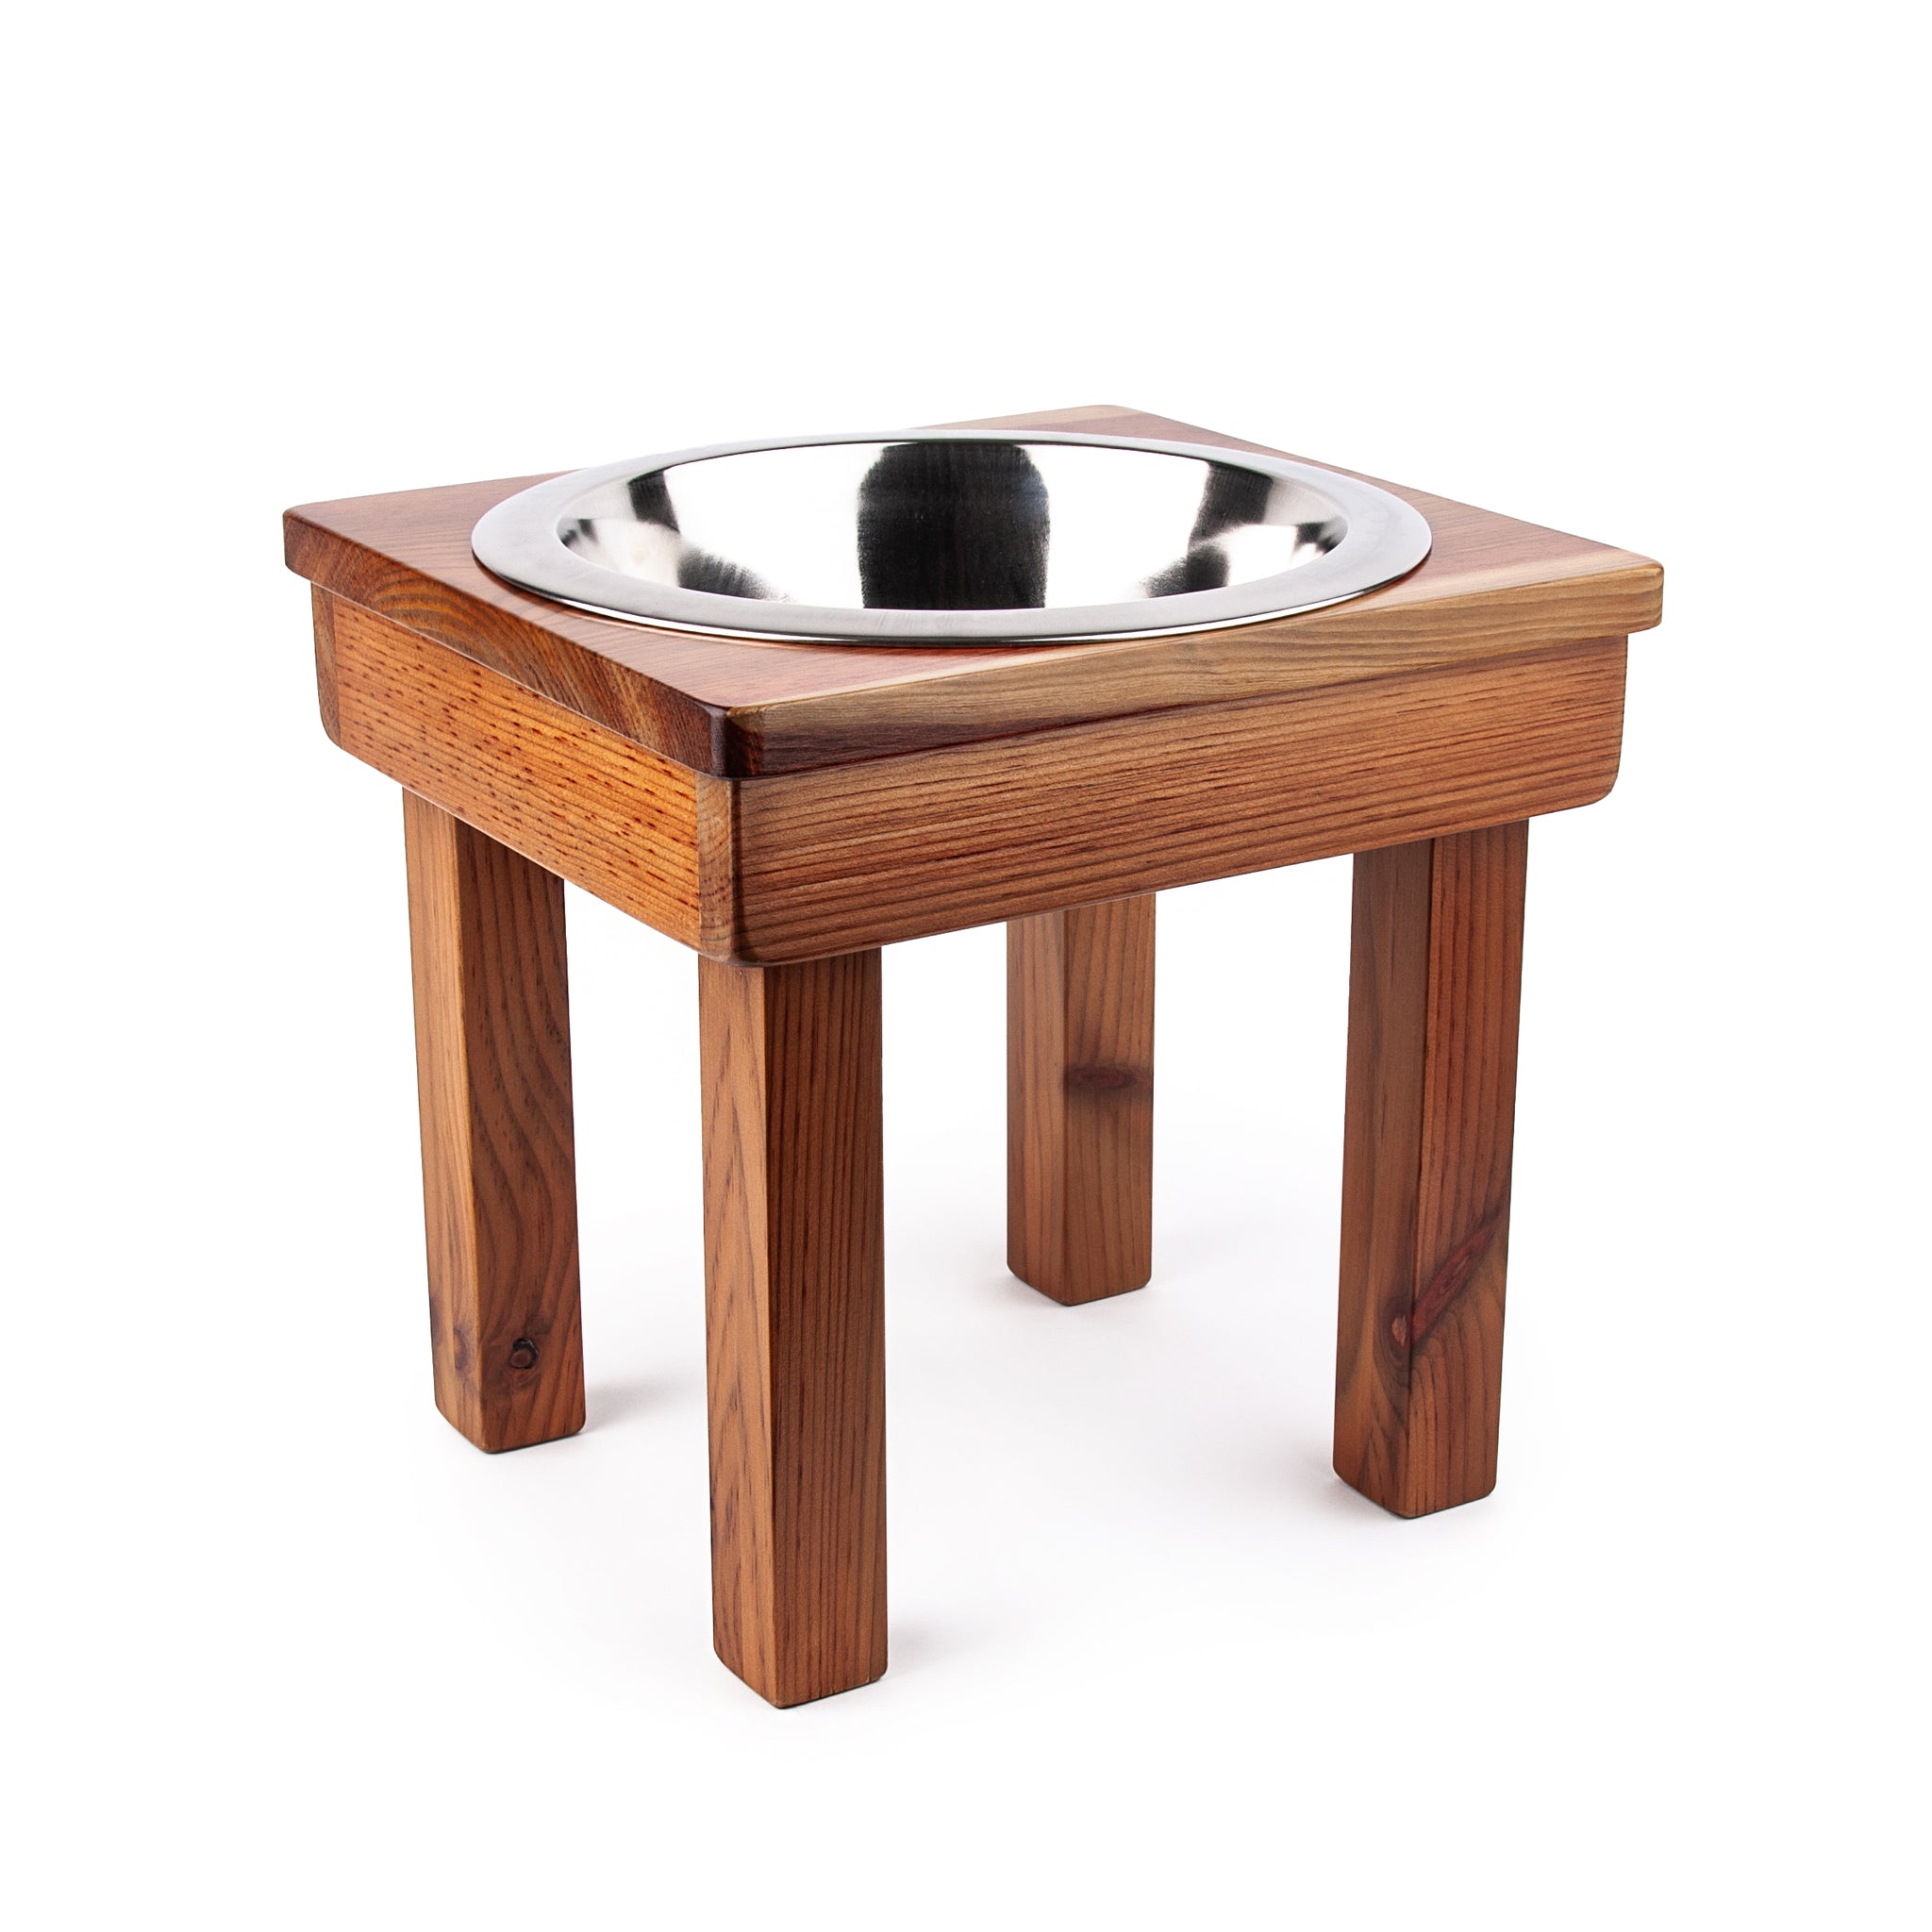 Elevated Dog Bowl - Single Dog Bowl Stand